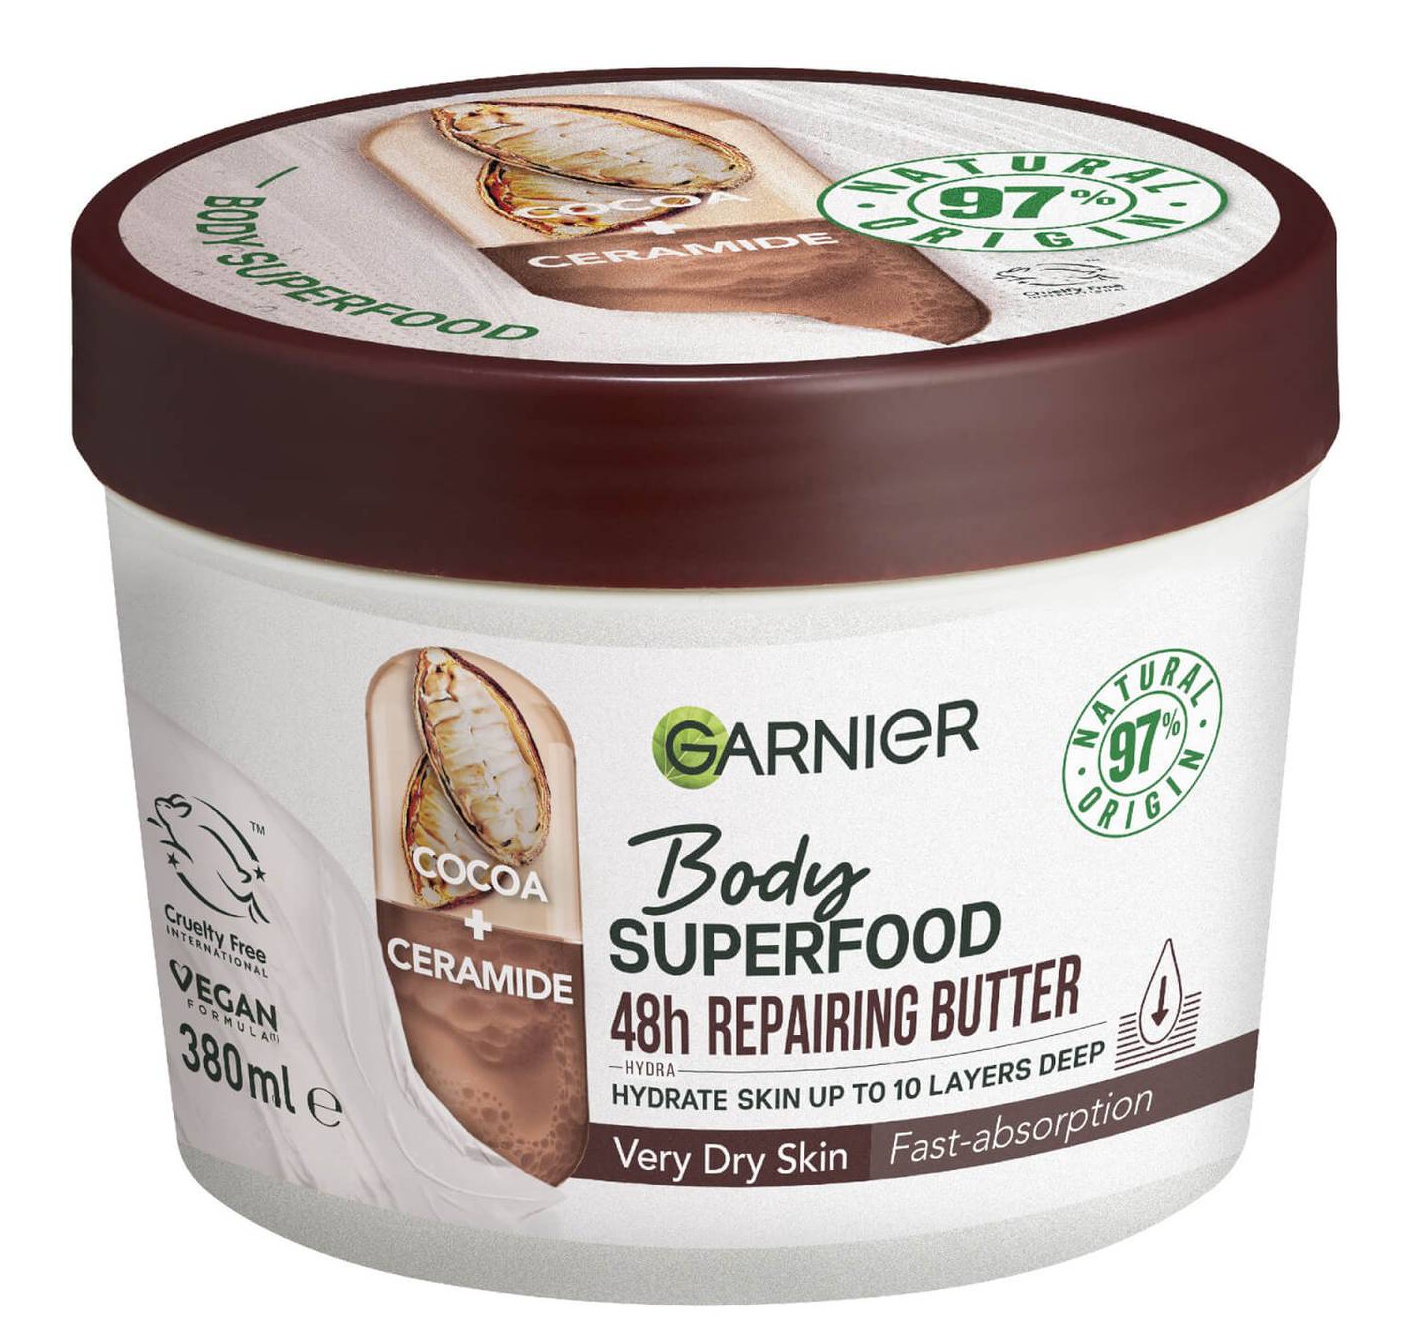 Garnier Body Superfood, Repairing Body Butter, Cocoa & Ceramide